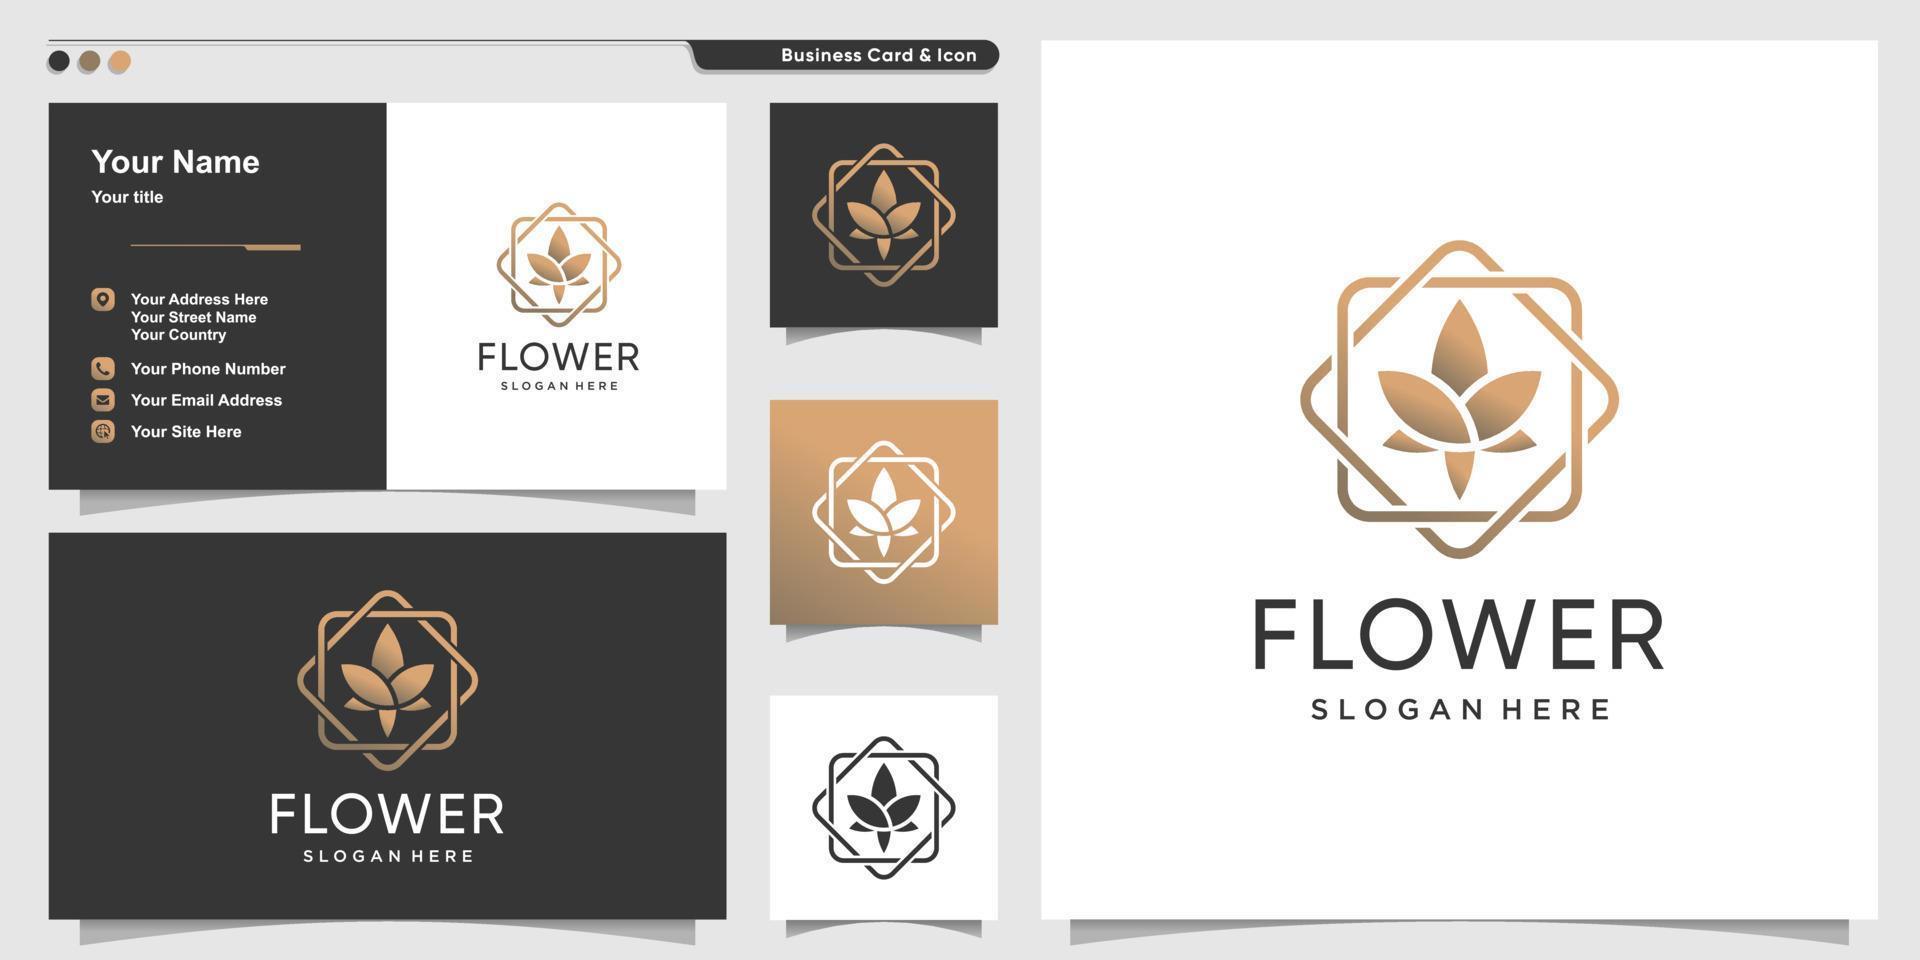 blomma logotyp med skönhet linje konst stil och visitkort design premium vektor